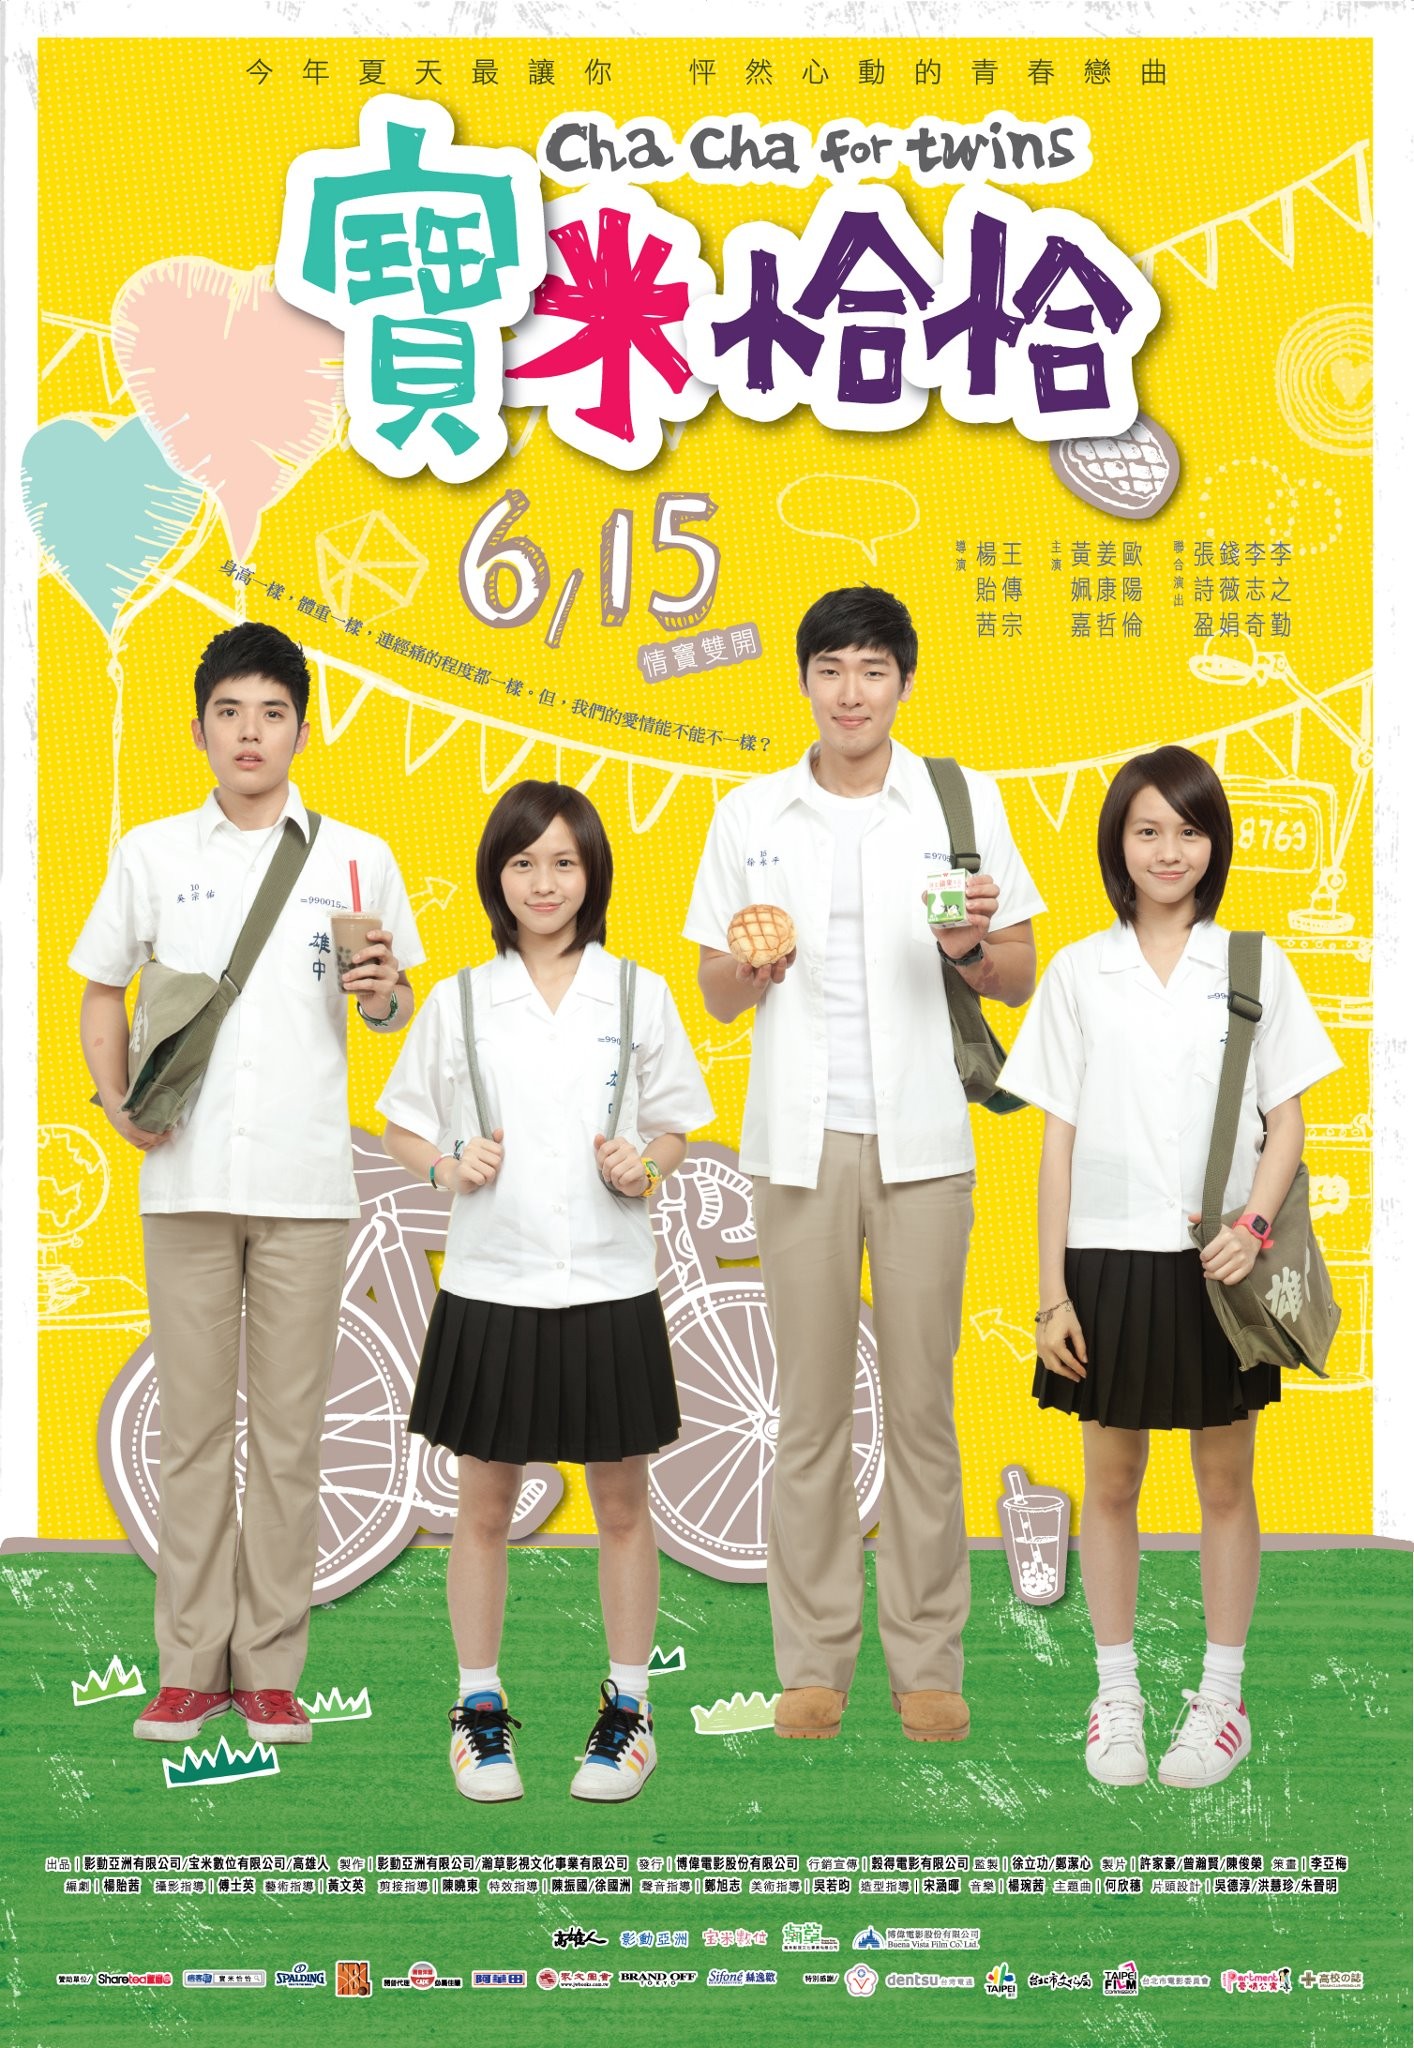 Mega Sized Movie Poster Image for Bao mi qia qia 